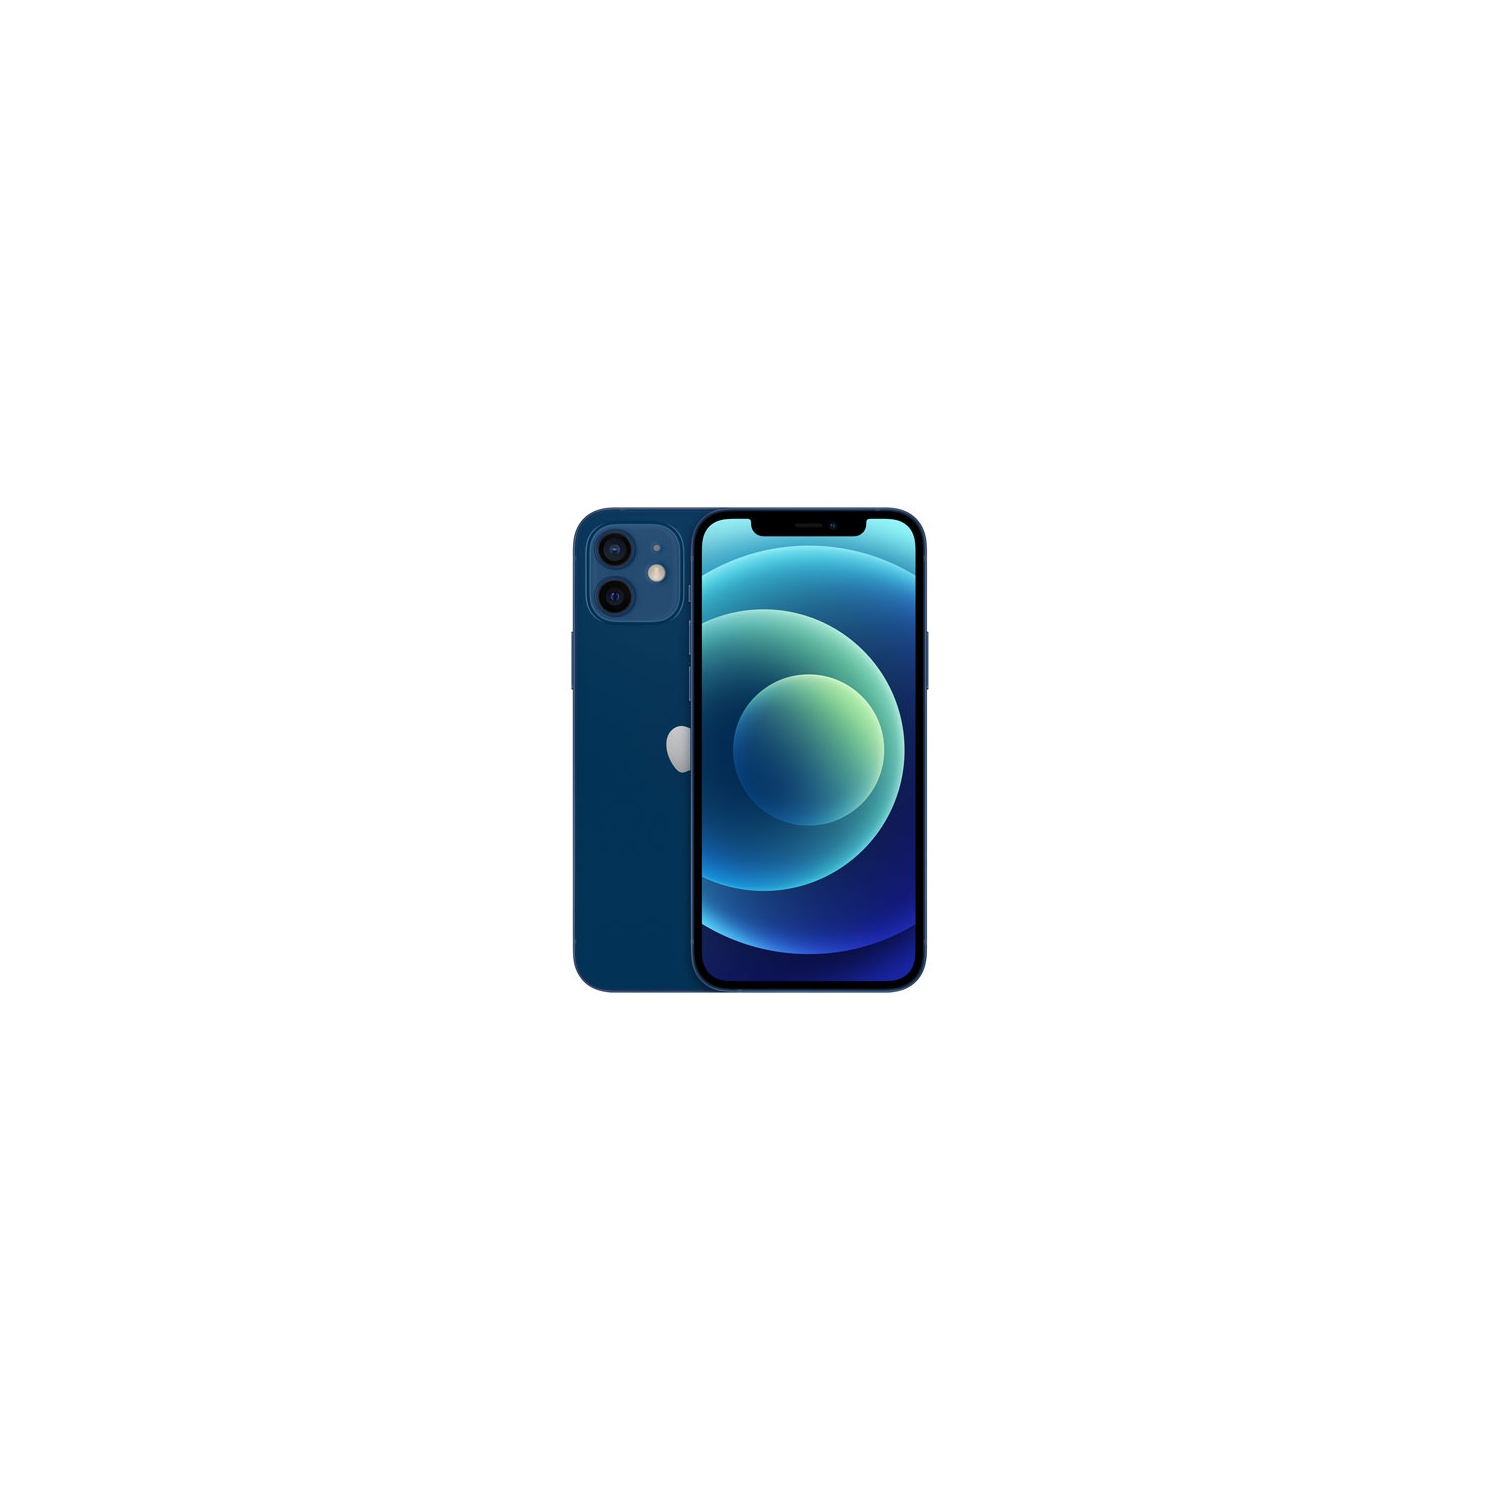 Refurbished (Good) - Apple iPhone 12 64GB Smartphone - Blue - Unlocked